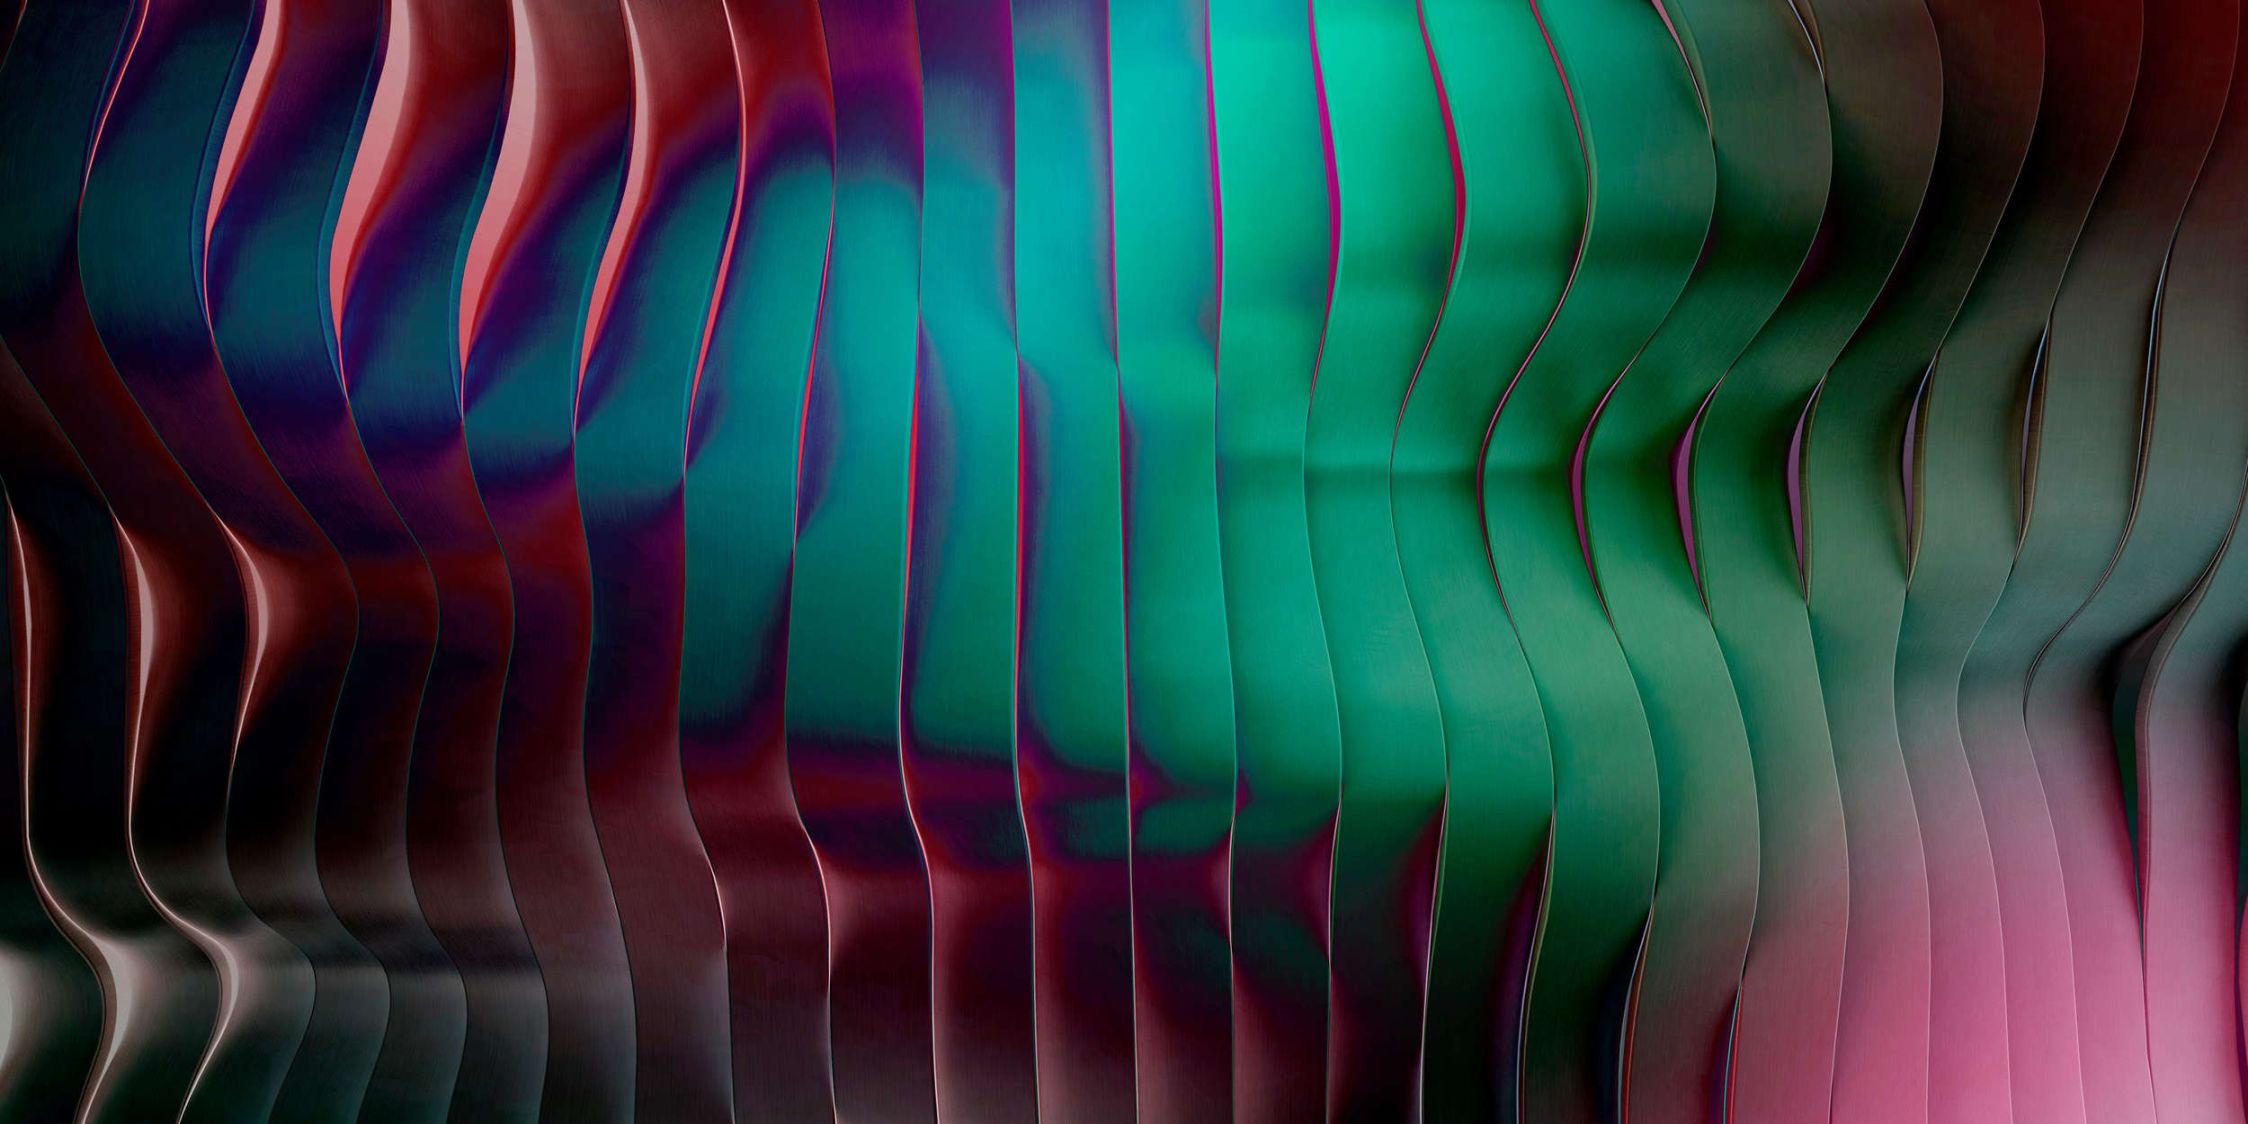             solaris 2 - Modern photo wallpaper with wavy architecture - neon colours | matt, smooth non-woven
        